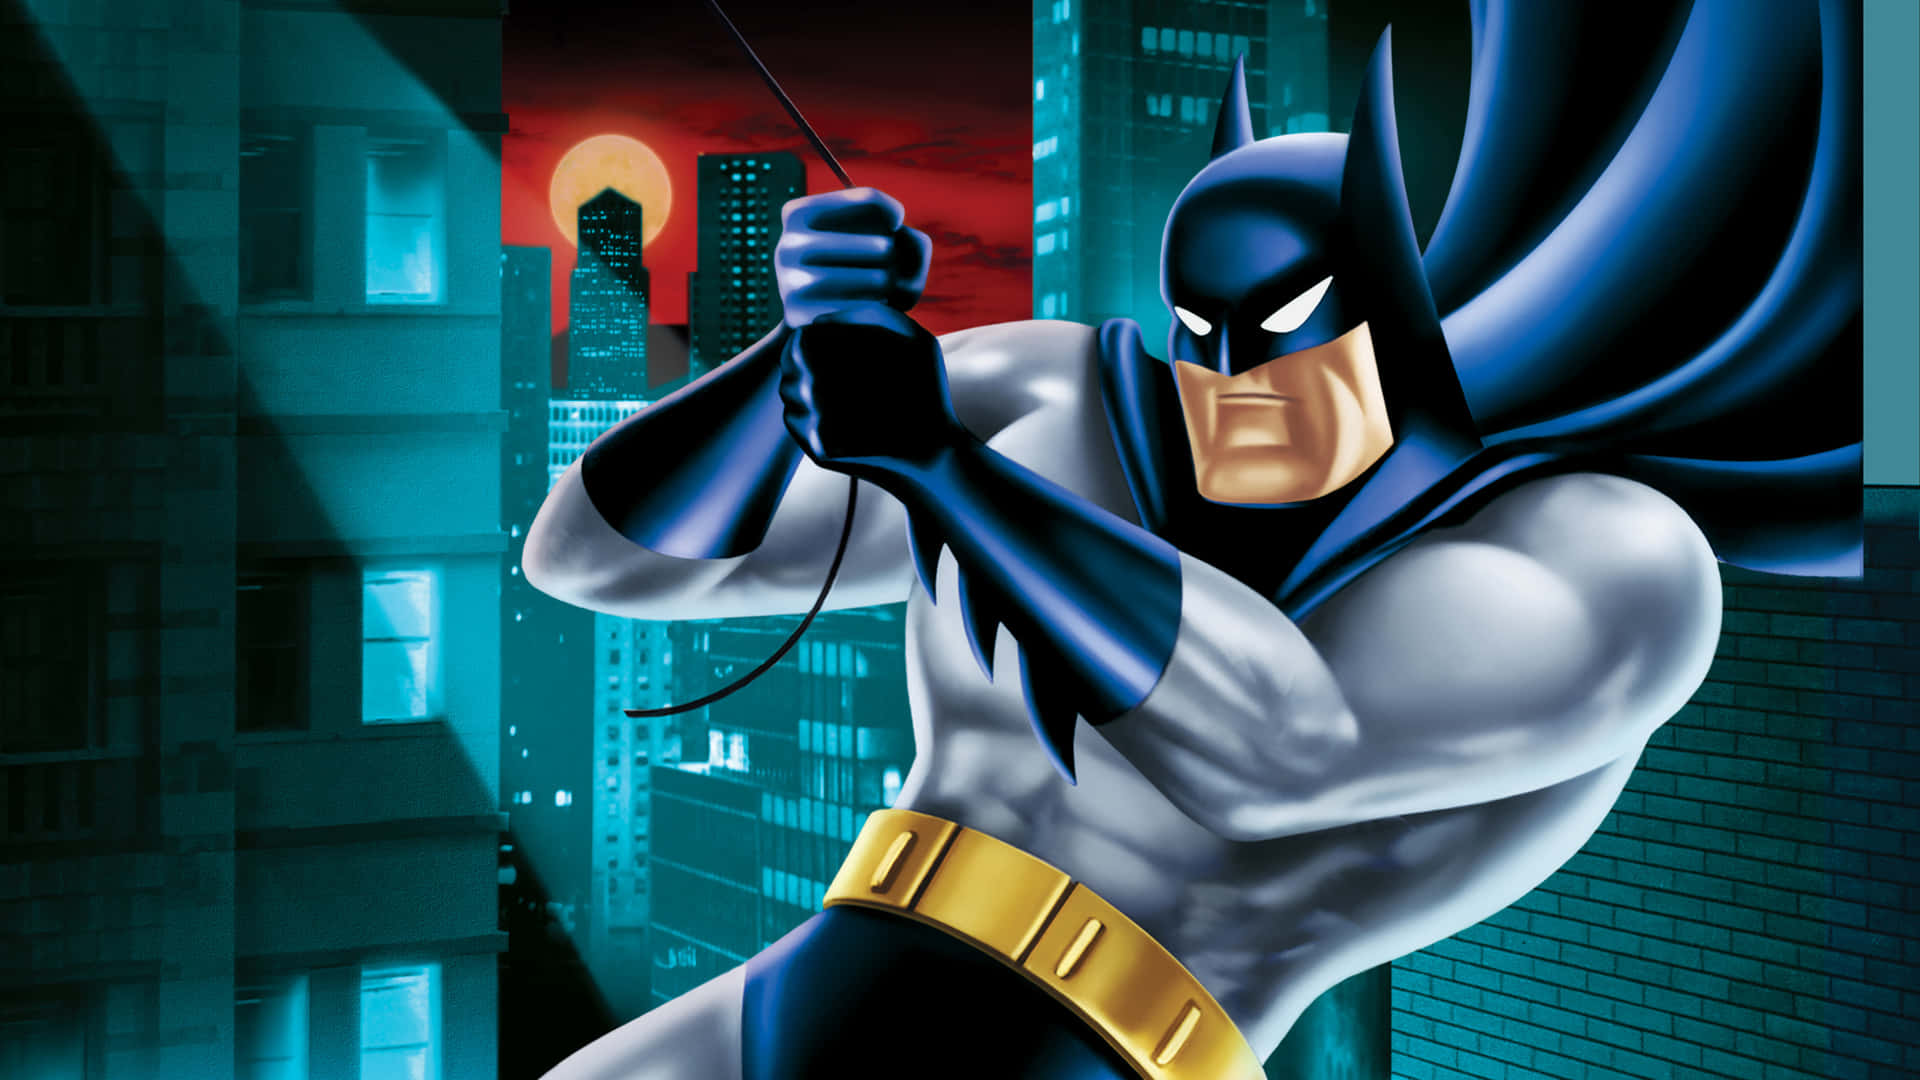 Batman soars through the night city skyline. Wallpaper